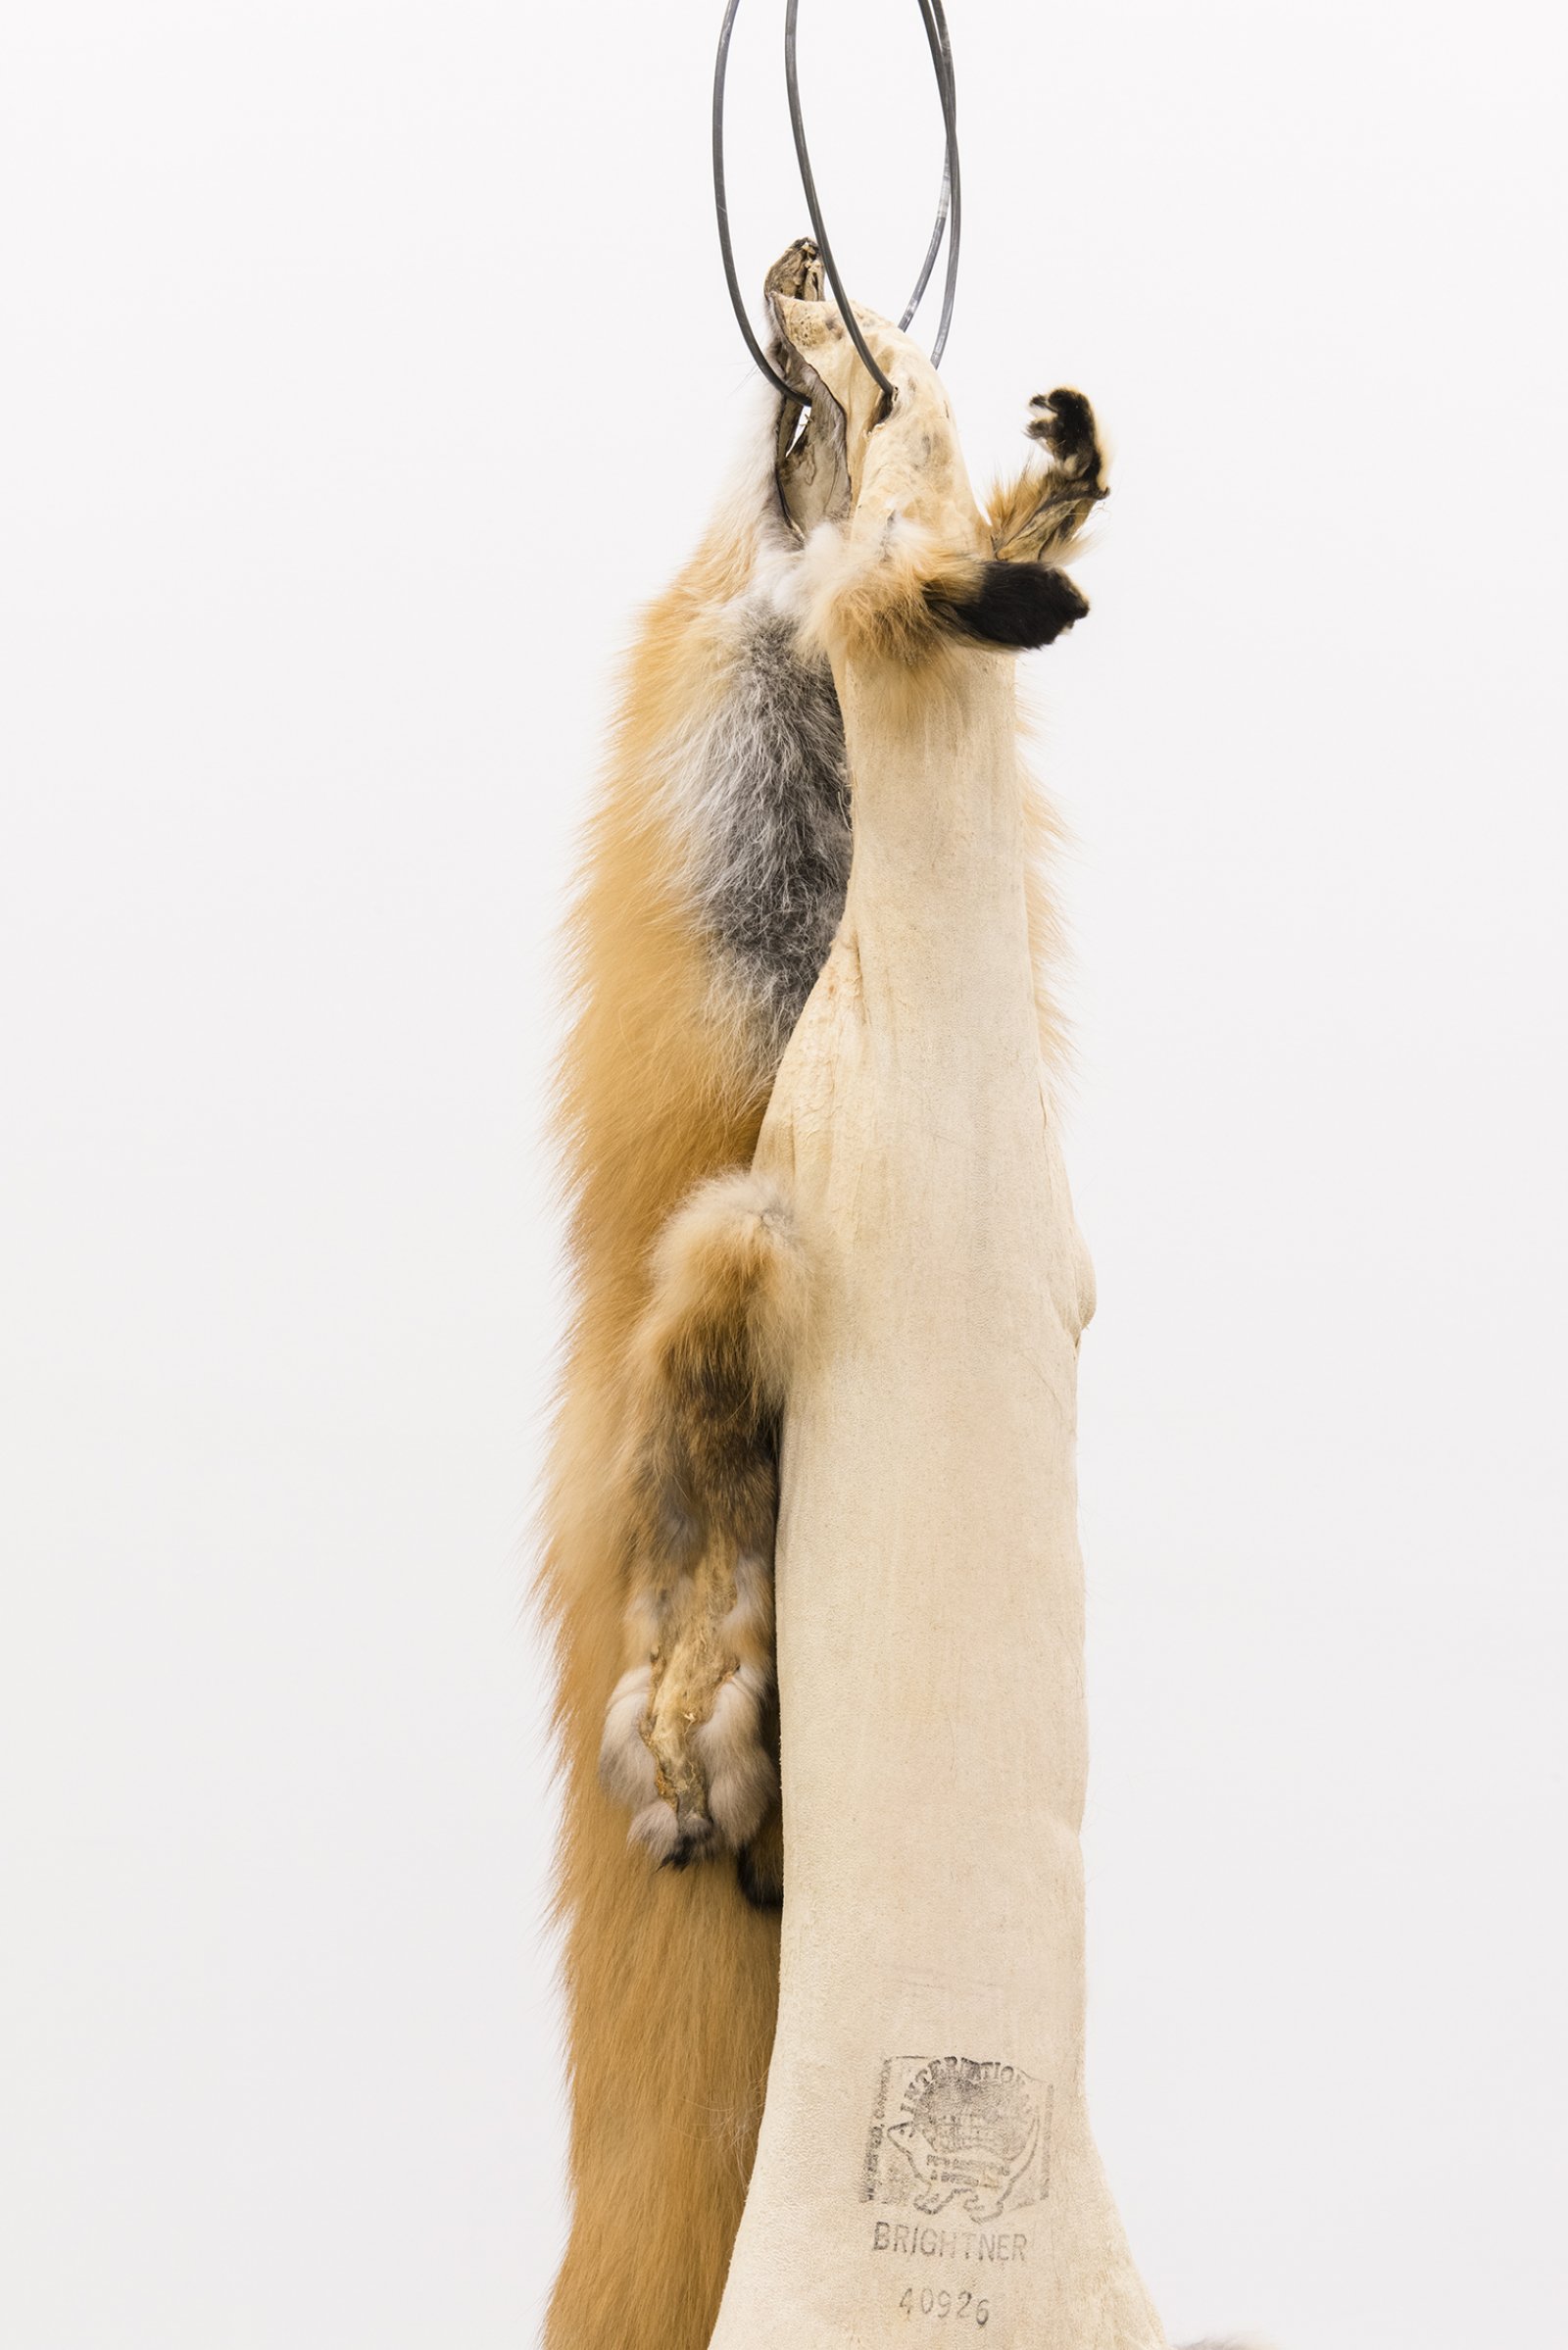 Duane Linklater, Kiss (detail), 2014, fox furs, garment rack, hangers, 66 x 60 x 20 in. (168 x 151 x 52 cm)